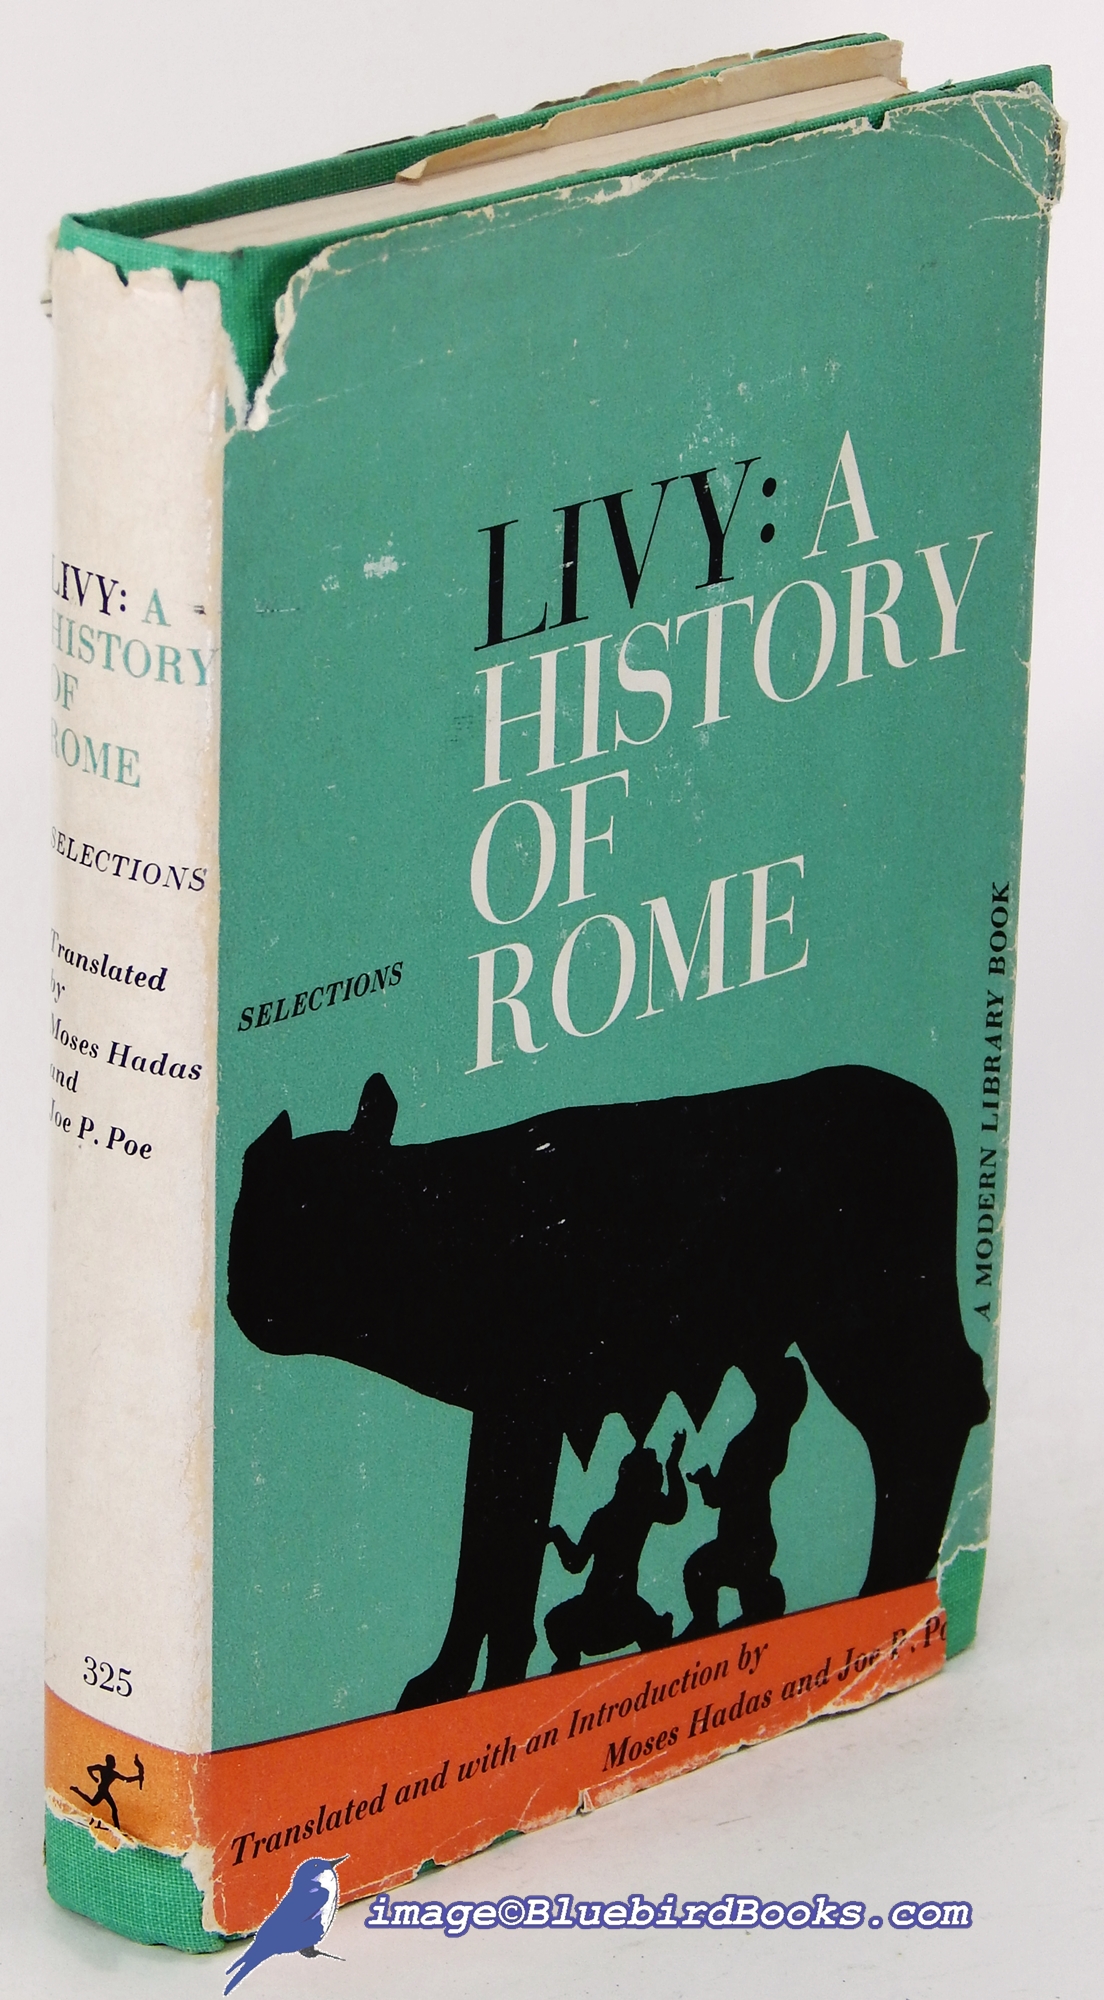 LIVY [TITUS LIVIUS PATAVINUS]; HADAS, MOSES; POE, JOE P. (TRANSLATORS) - Livy: A History of Rome, Selections (Modern Library #325. 1)